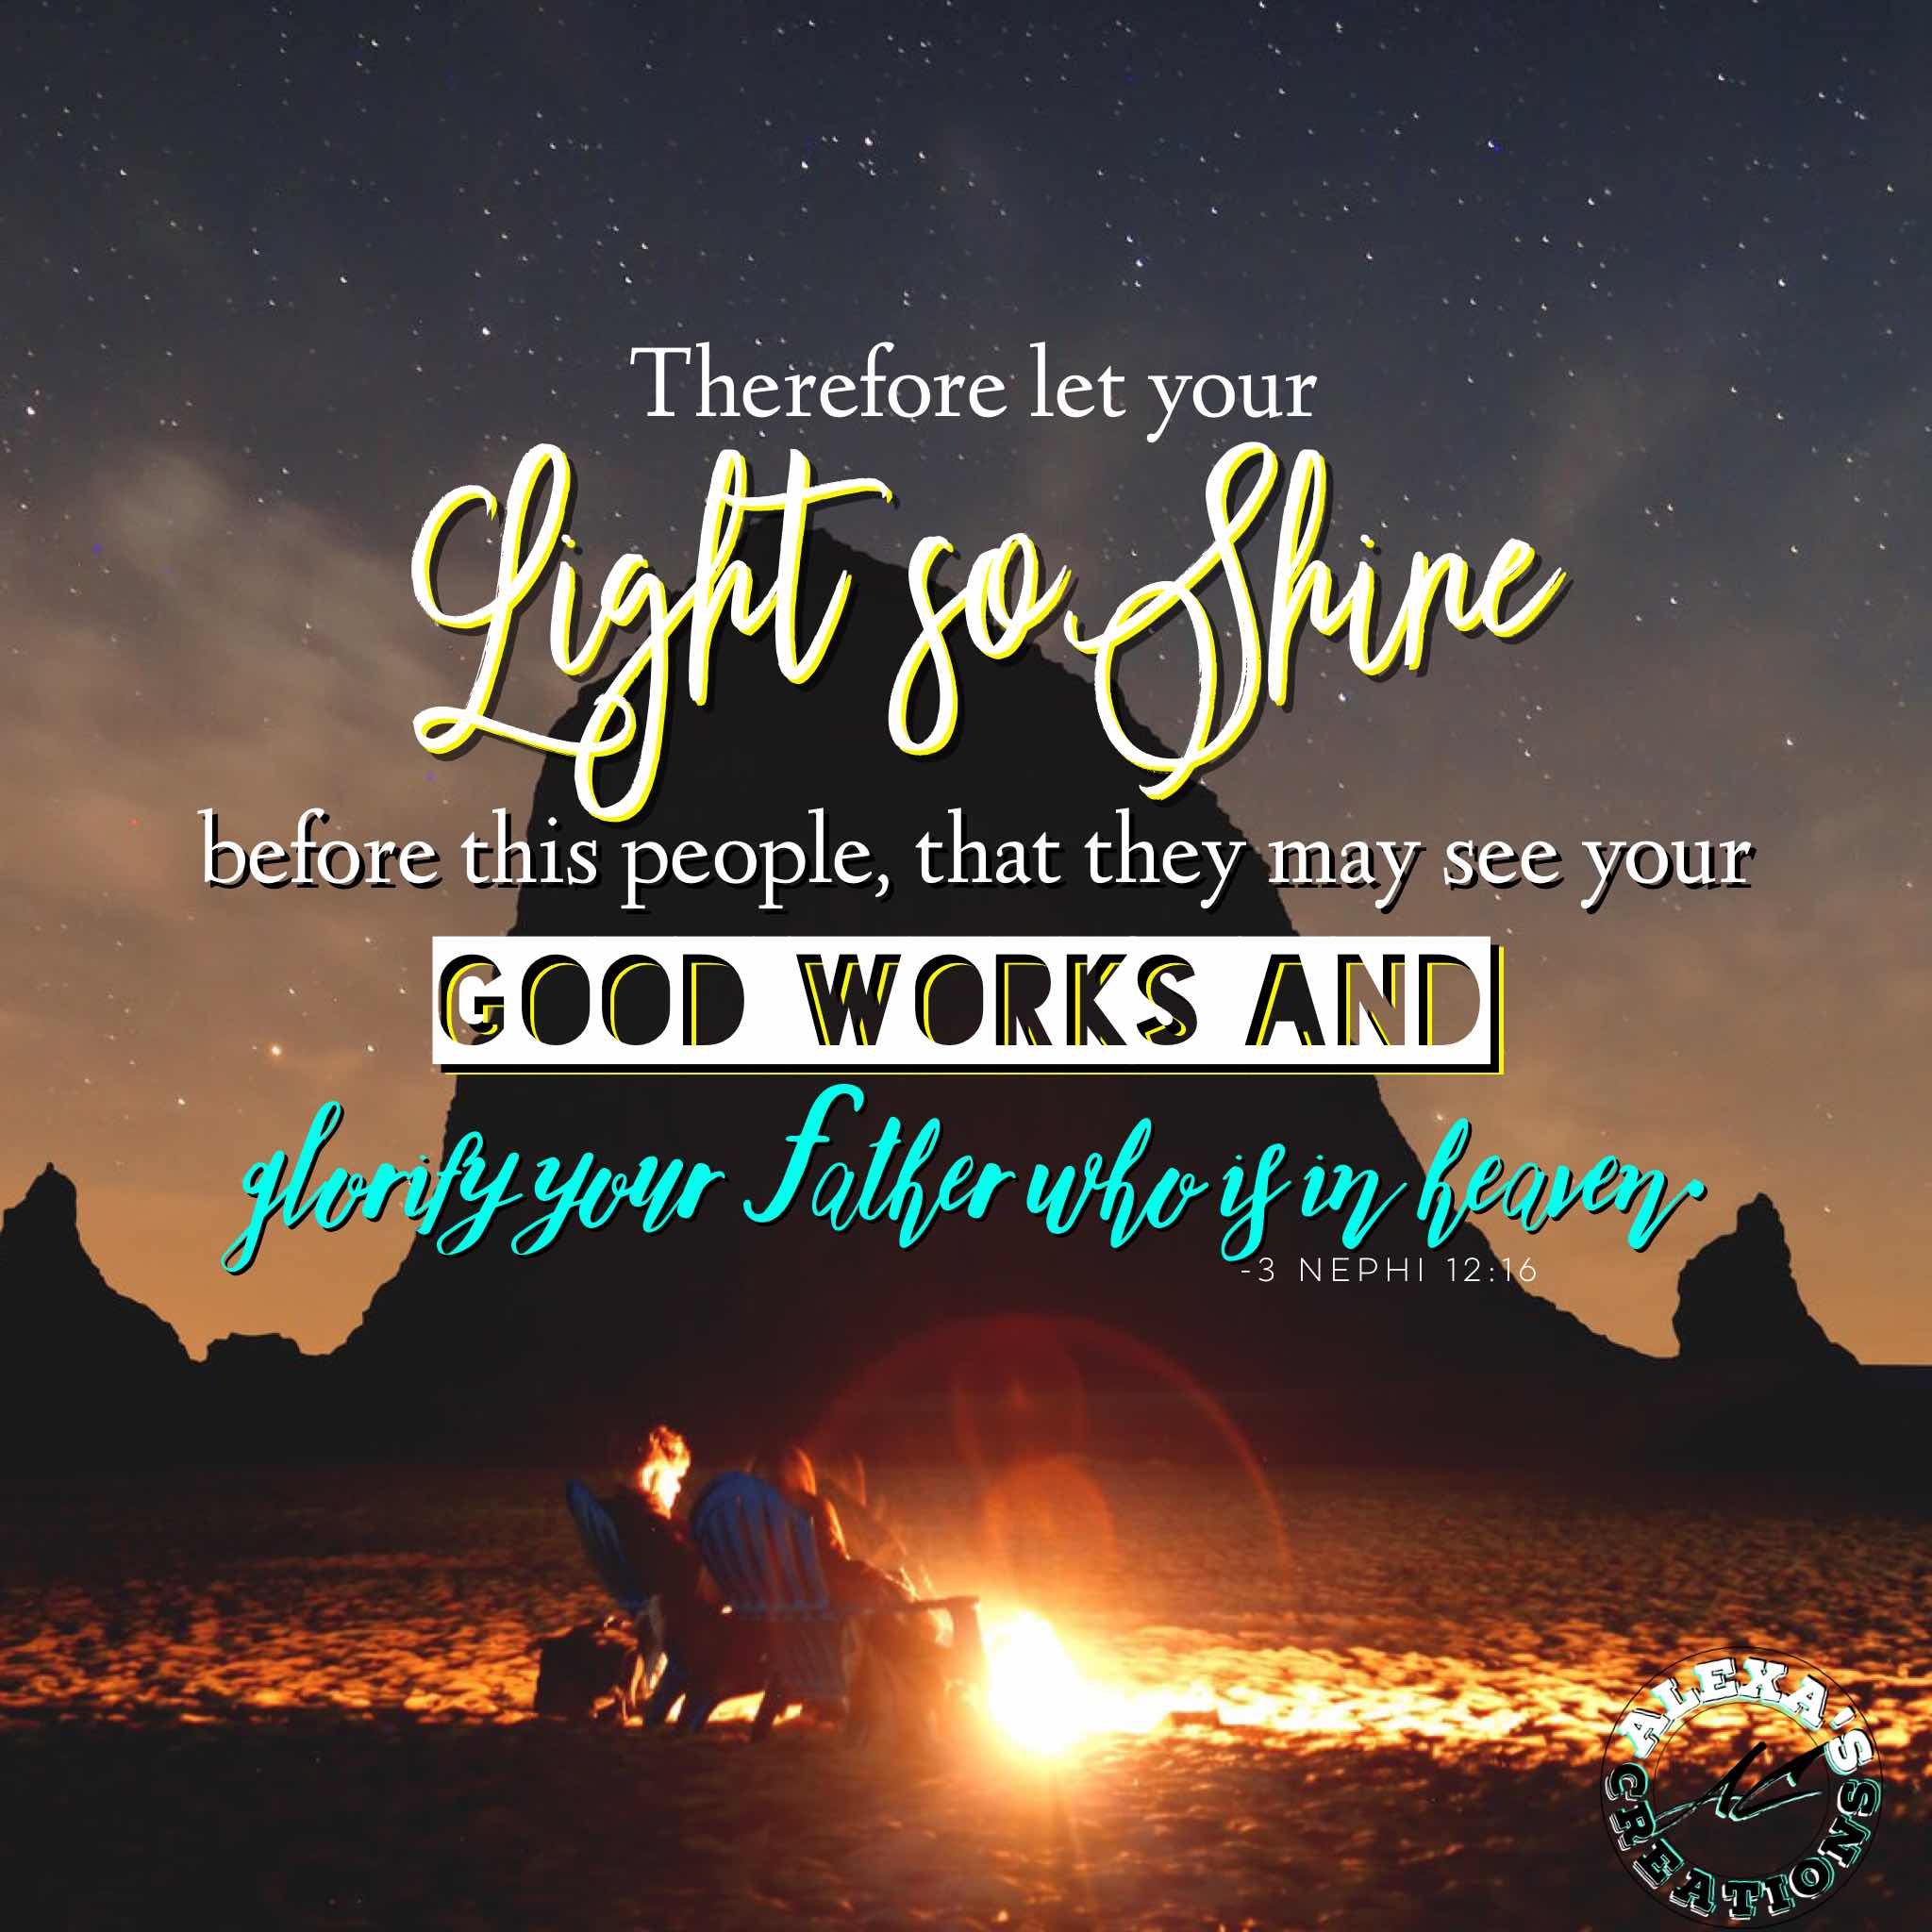 Alexa: Let your light so shine